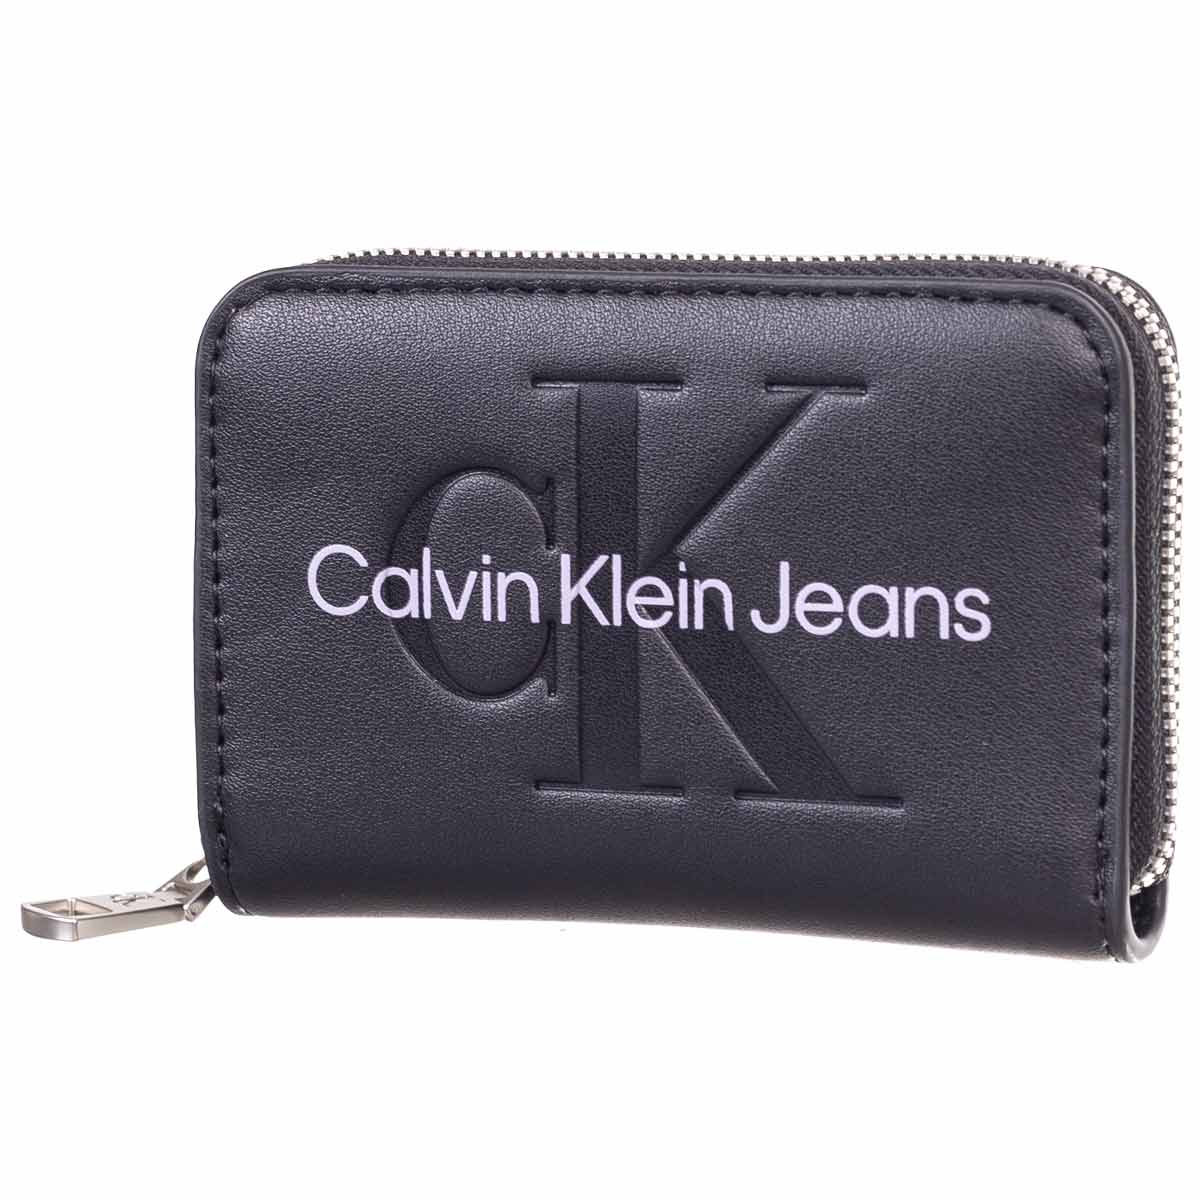 Calvin Klein Jeans Woman's Wallet 8720108126236